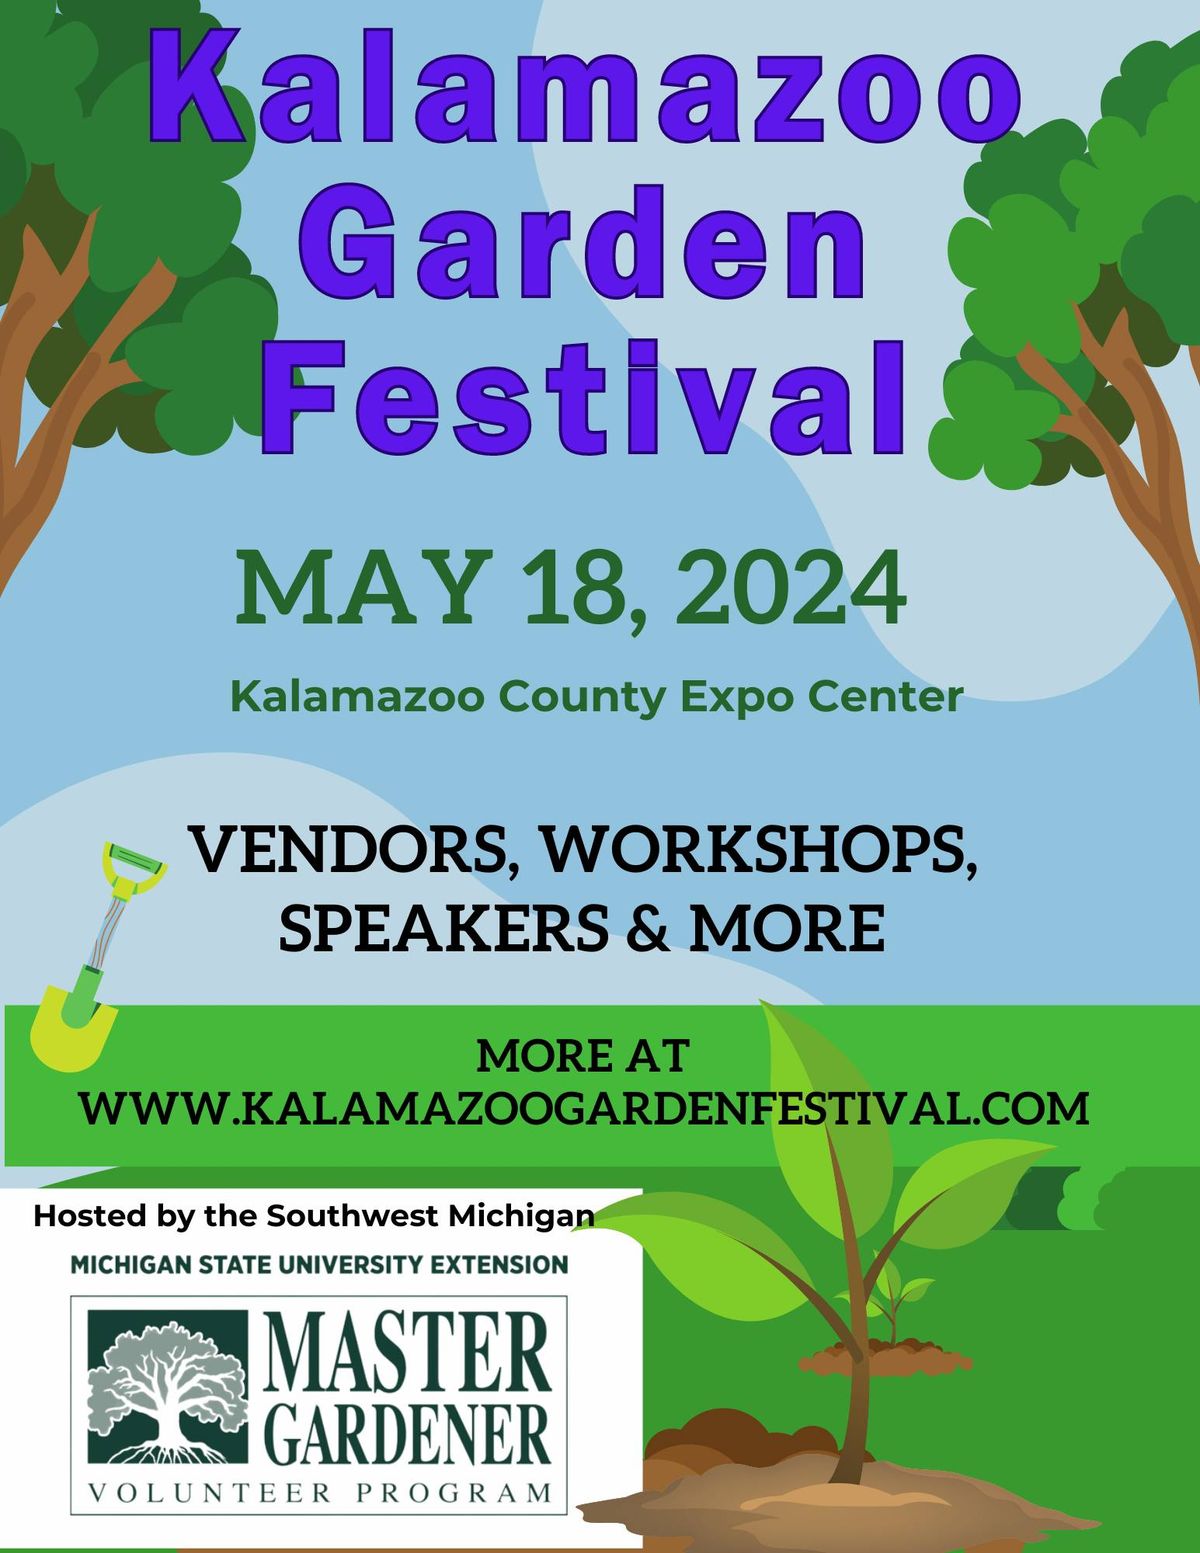 Kalamazoo Garden Festival